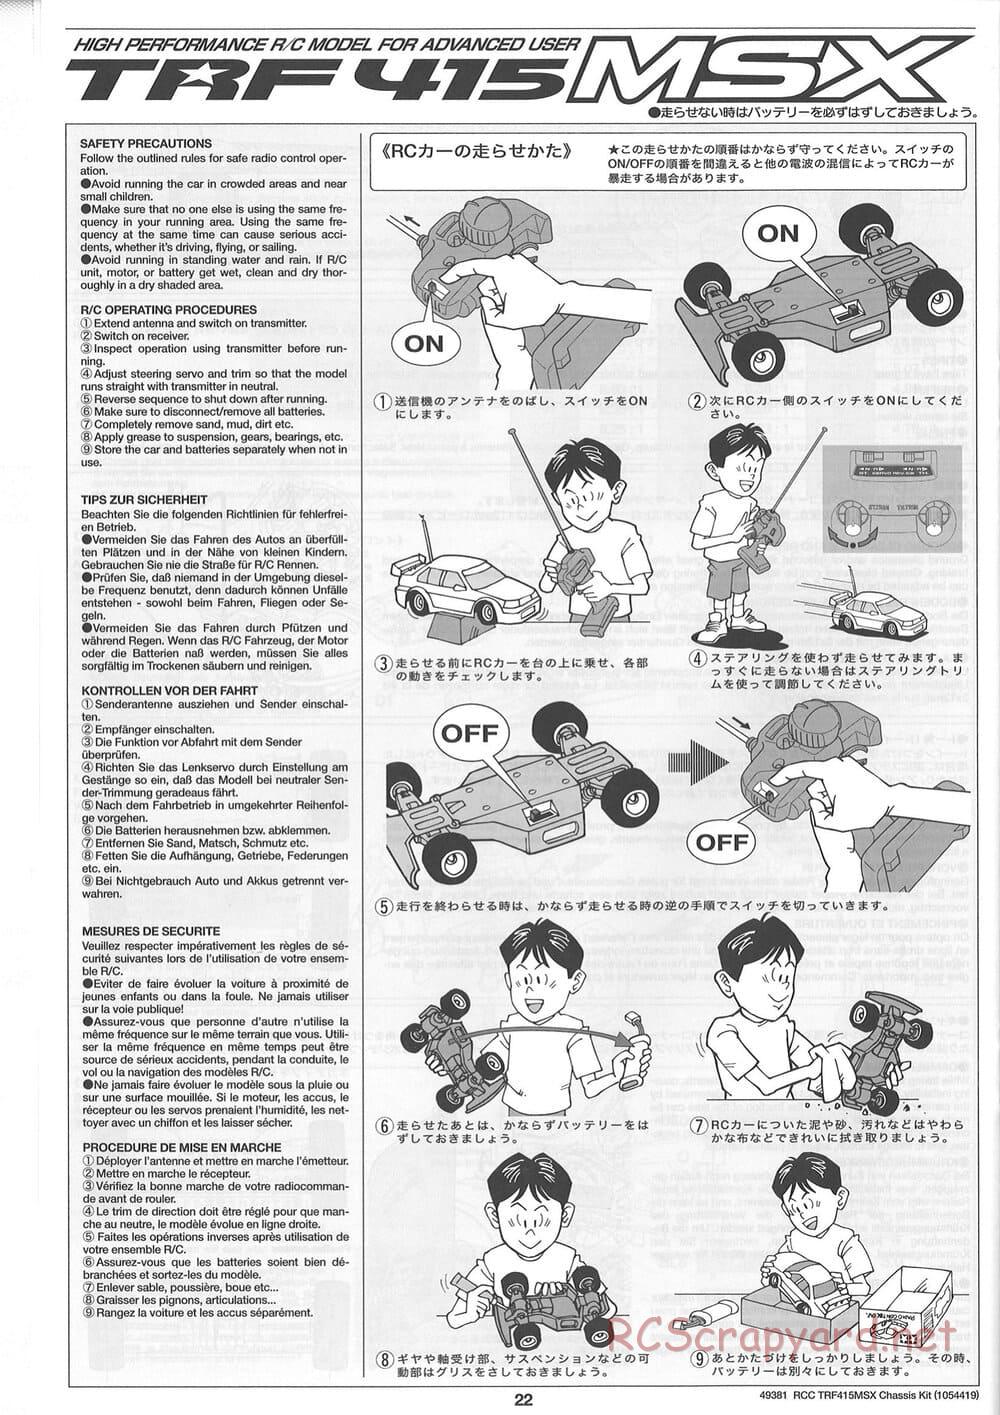 Tamiya - TRF415-MSX Chassis - Manual - Page 22